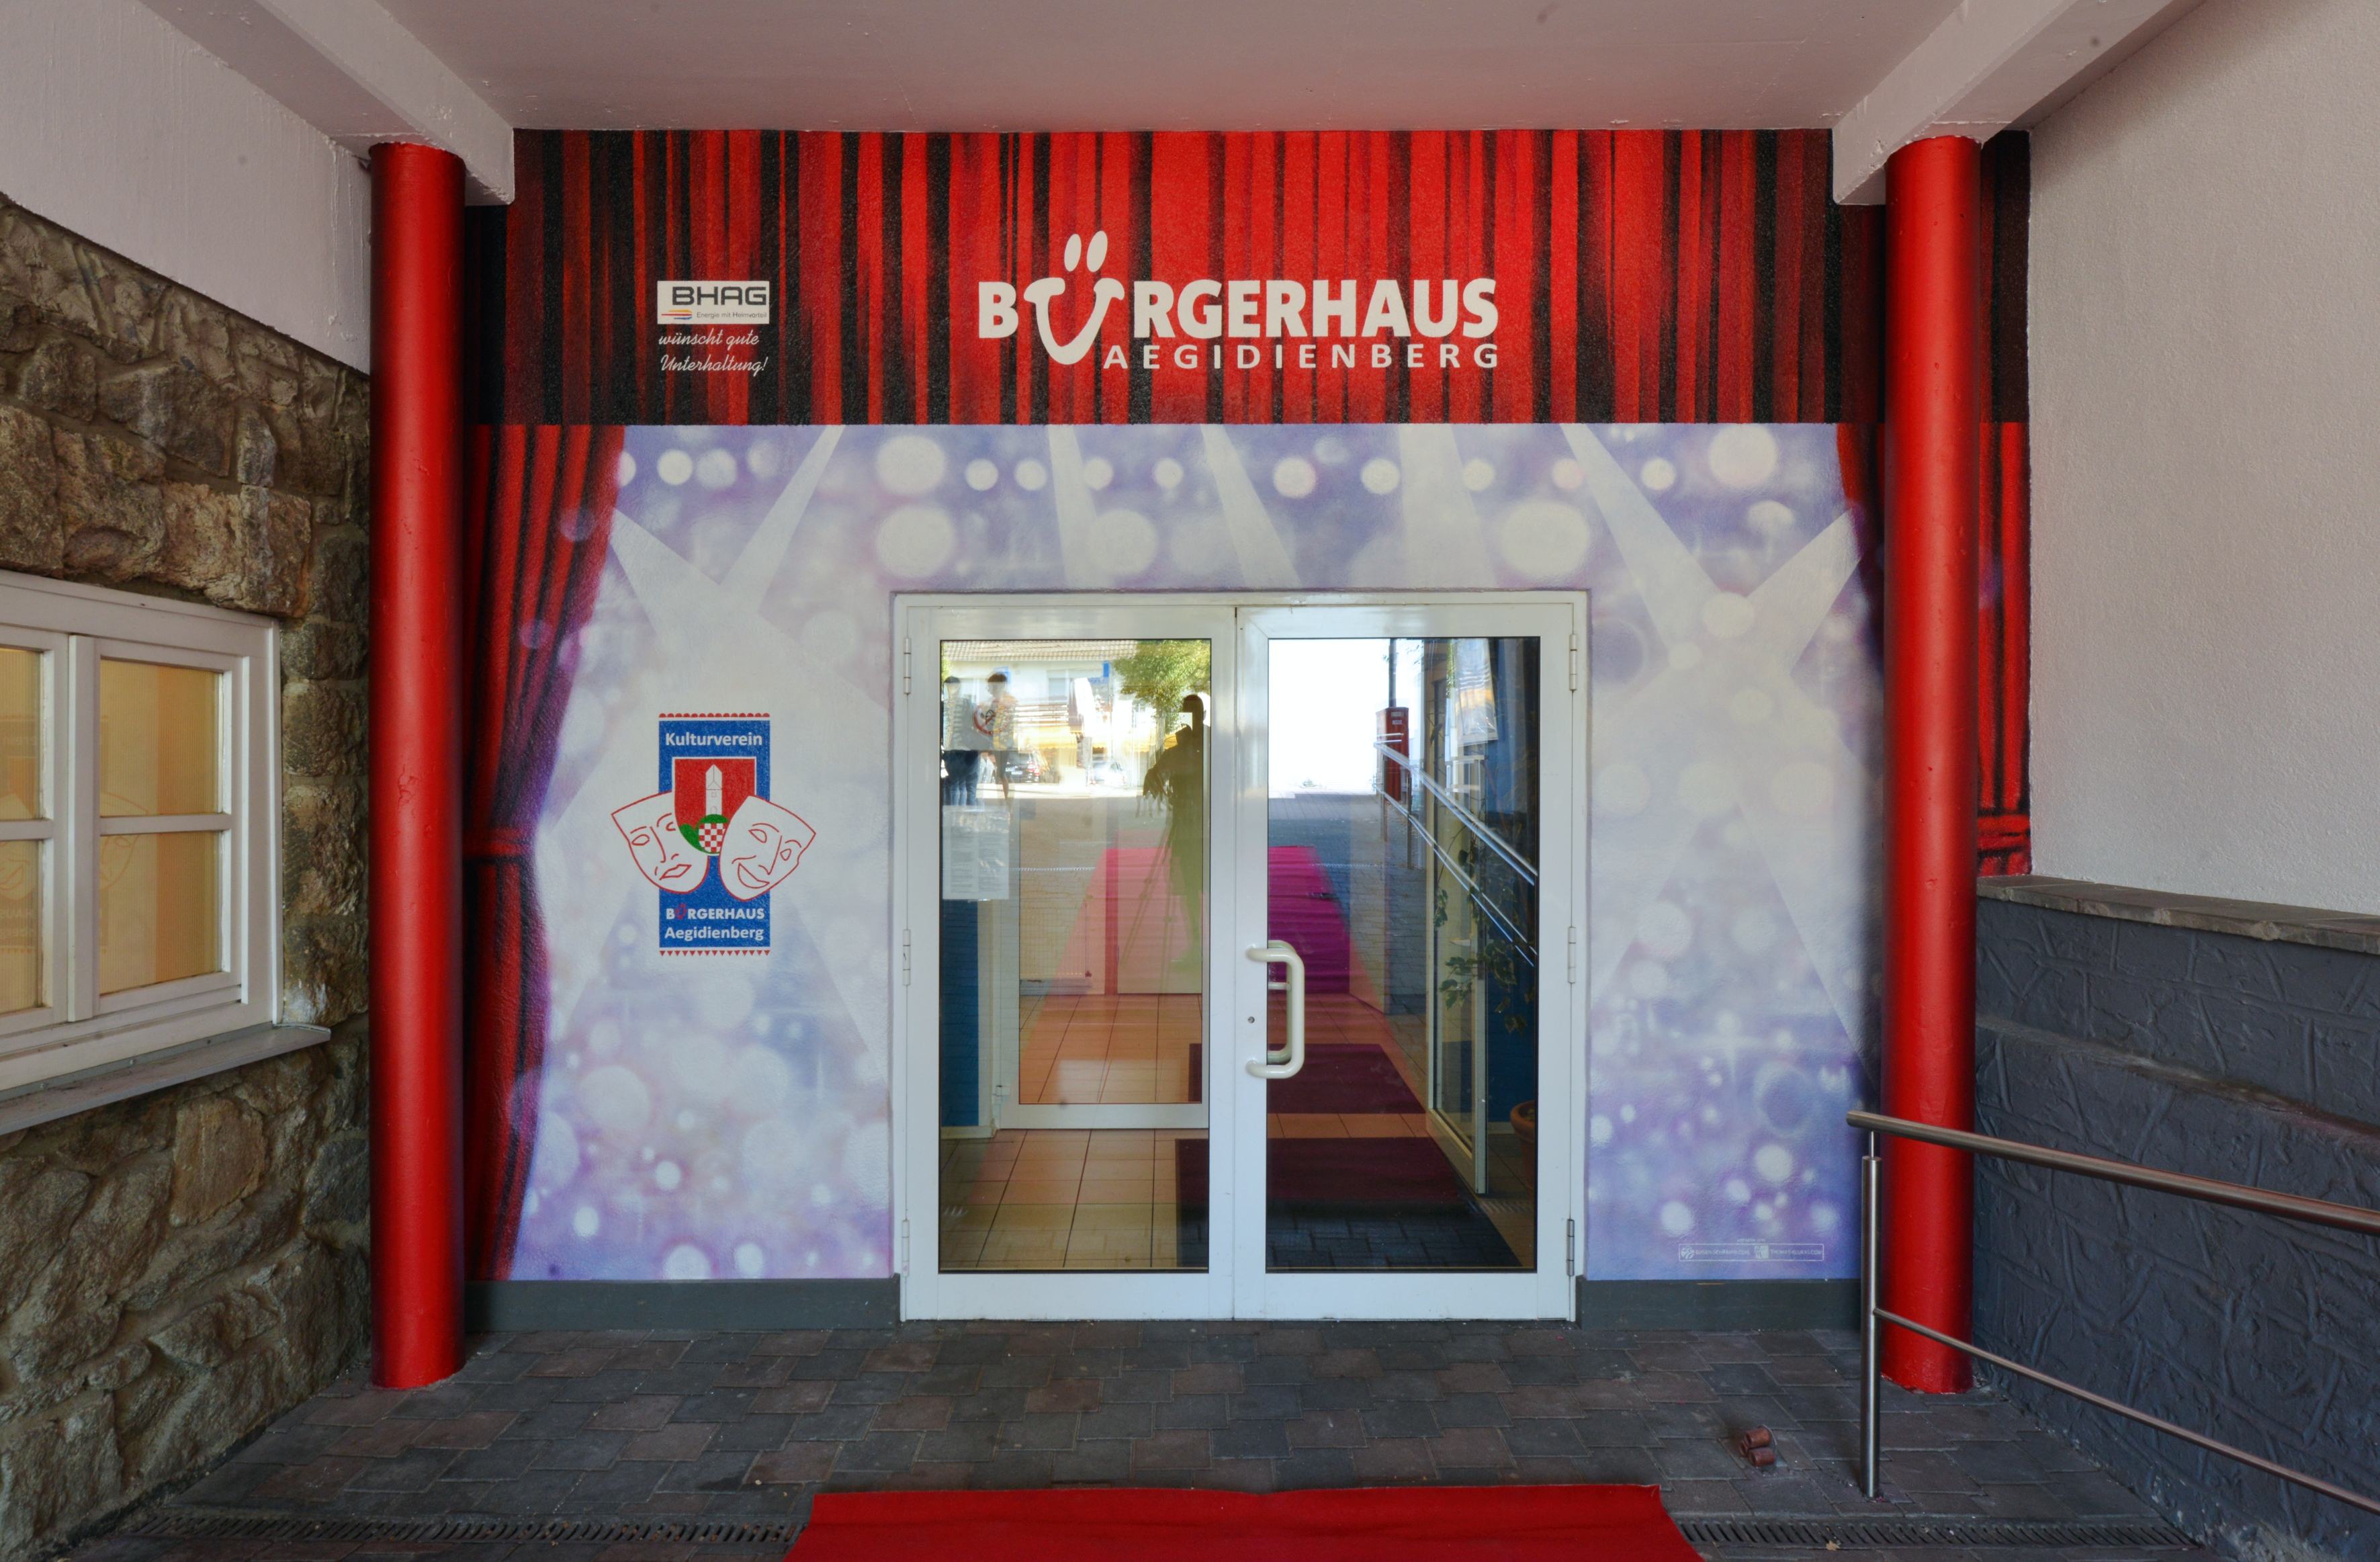 2018 - Graffiti Eingang Bürgerhaus Aegidienberg